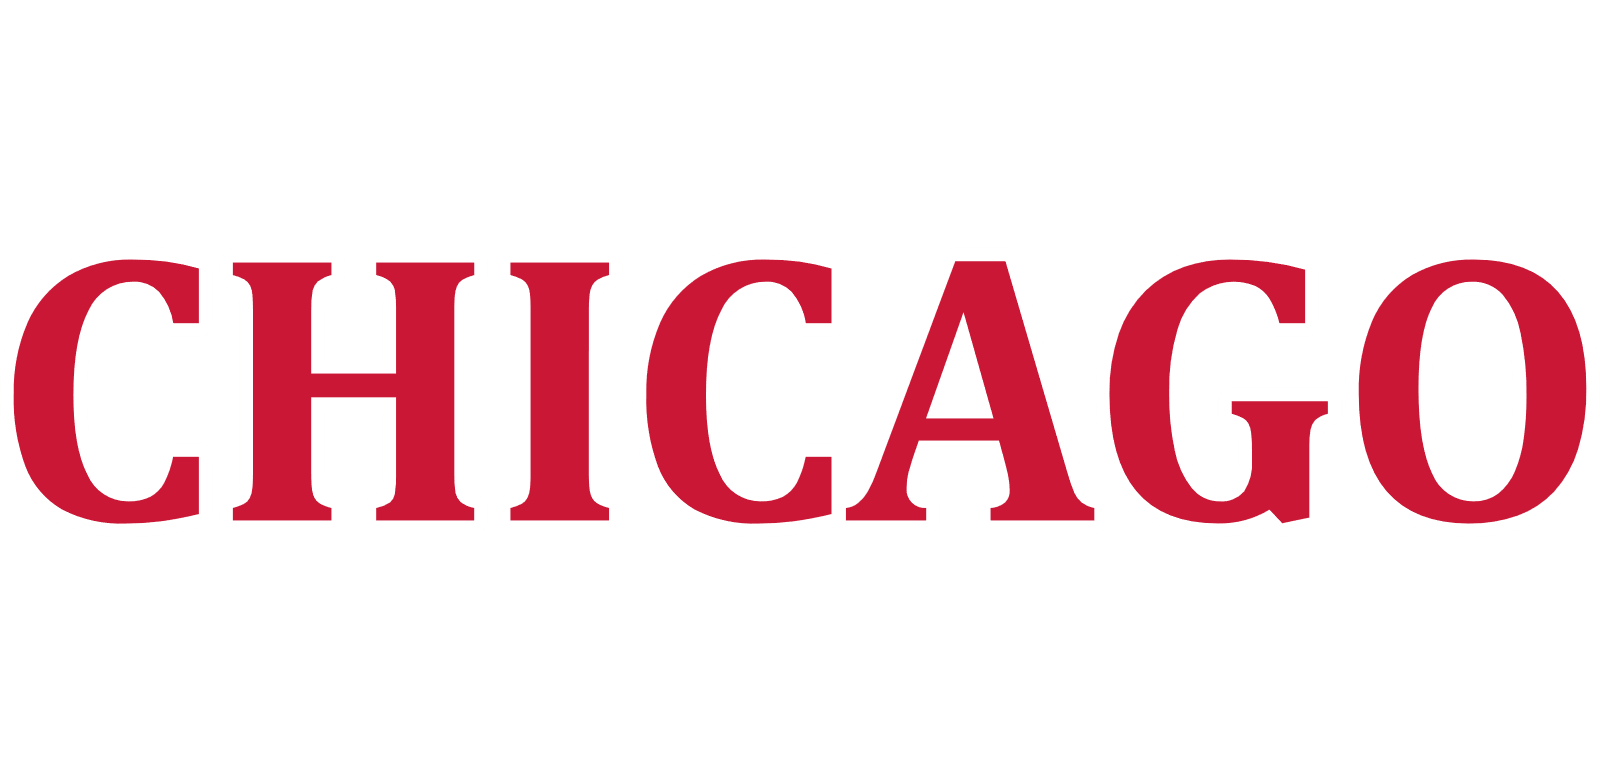 Chicago Logo Transparent Background